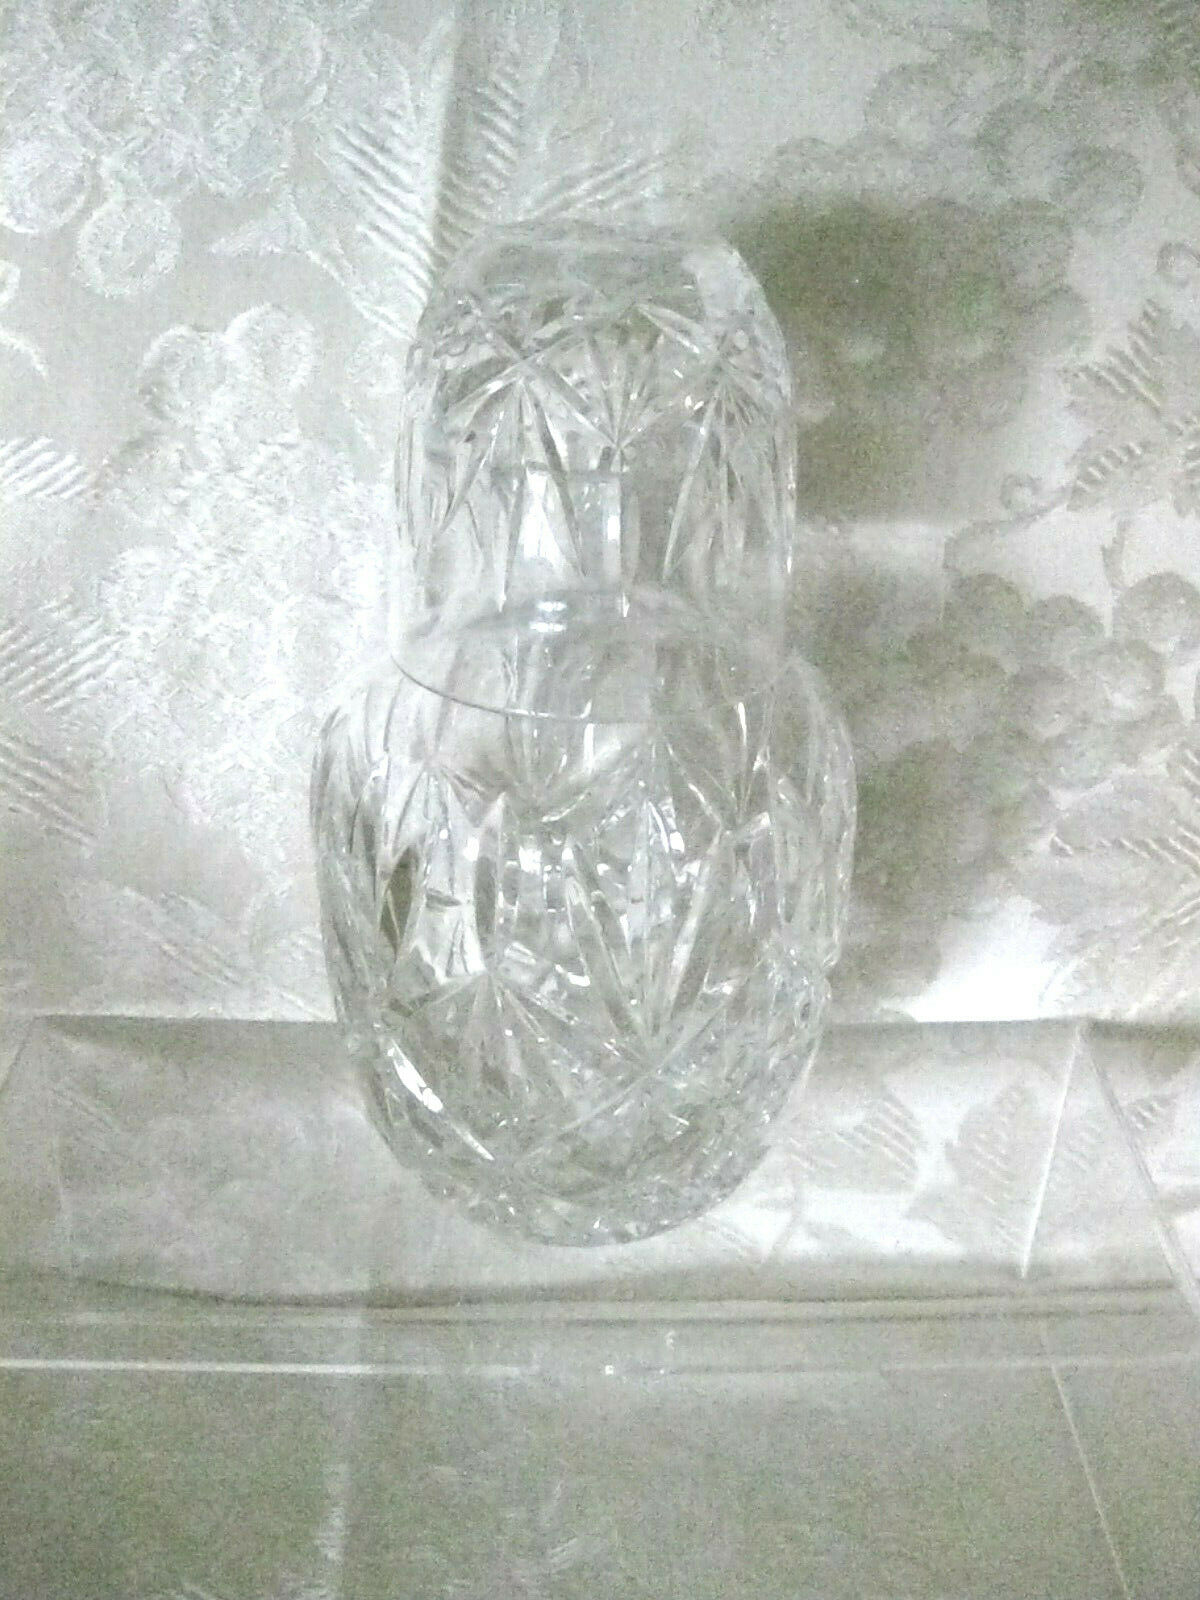 Brilliant Deep Cut Crystal Glass  Water Carafe Decanter Bar Cup Tumbler   Dnr